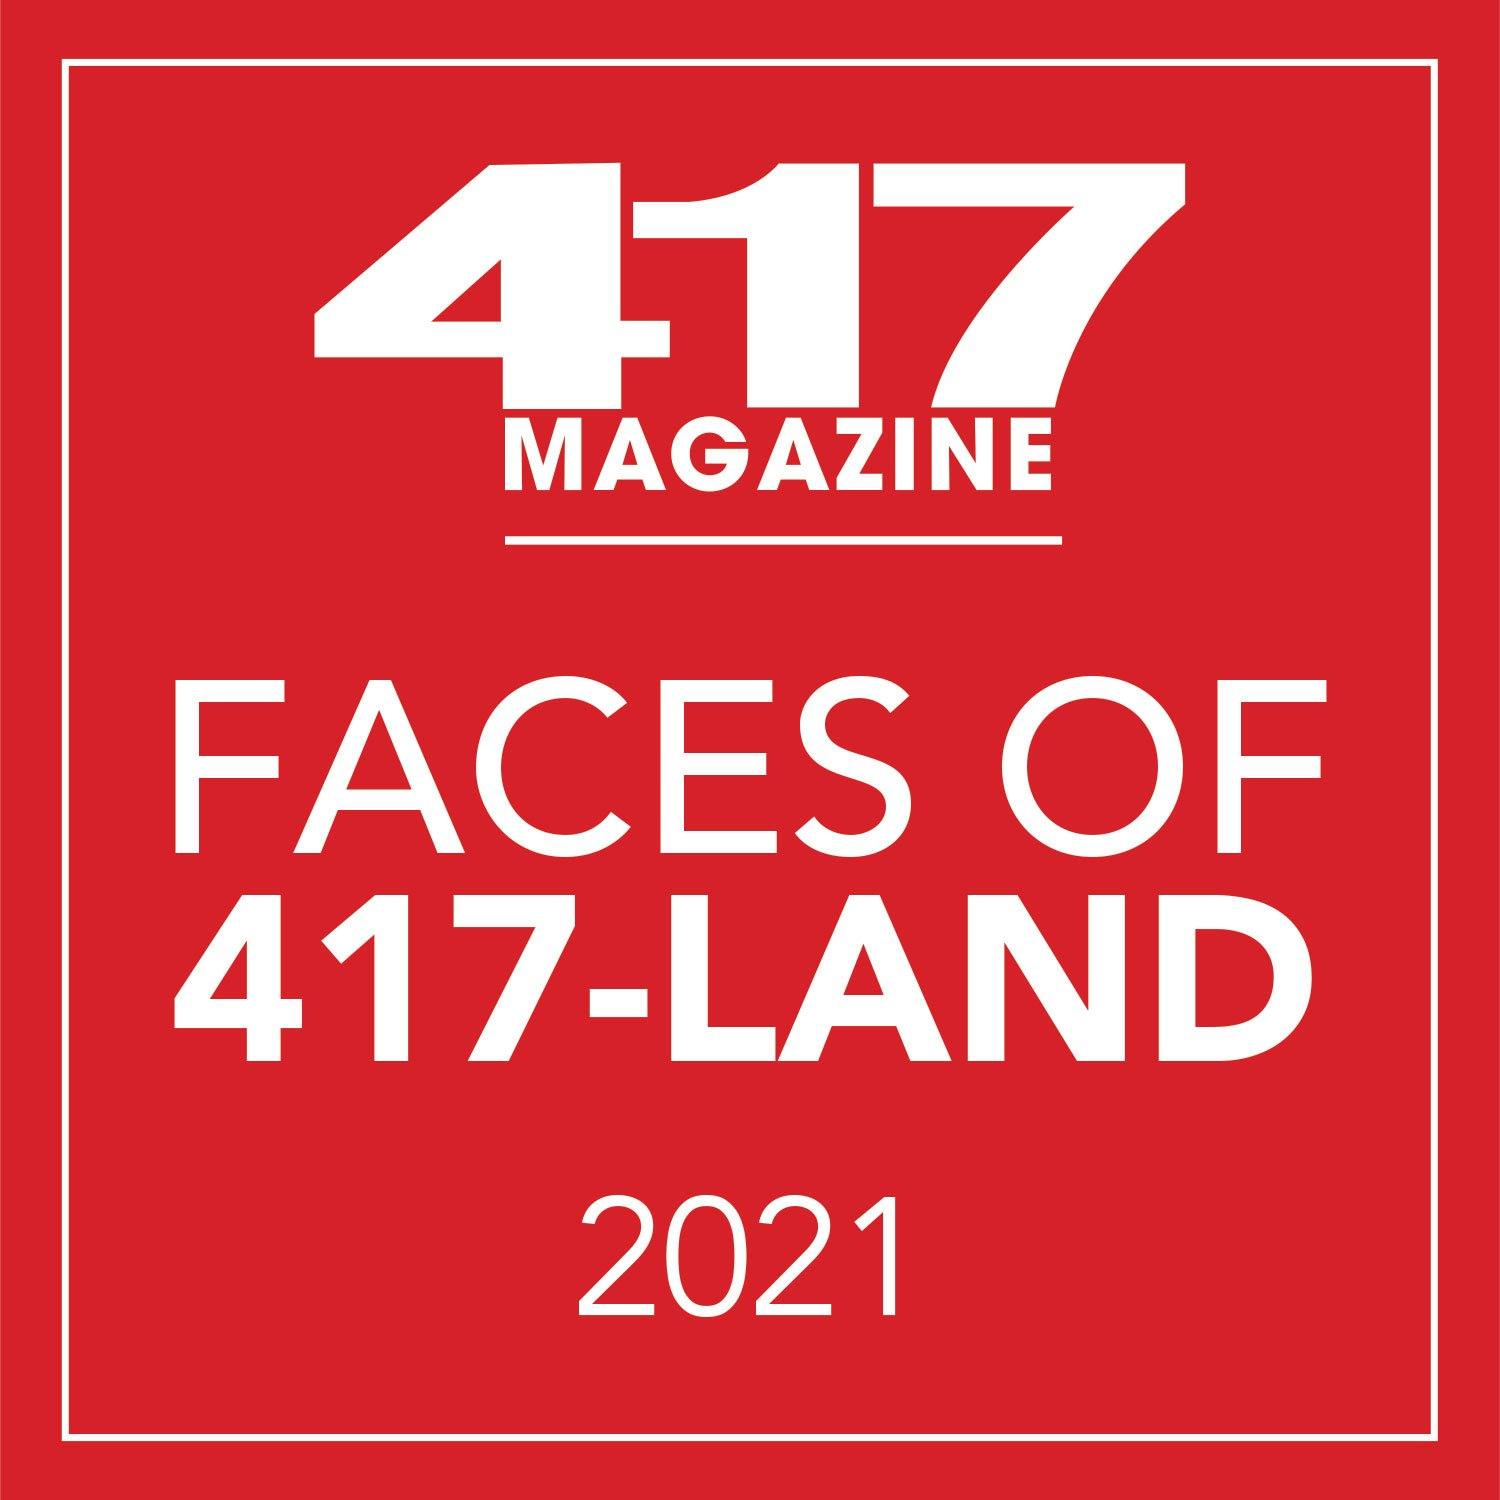 417 Magazine FACES Decal by NewsKeepsake